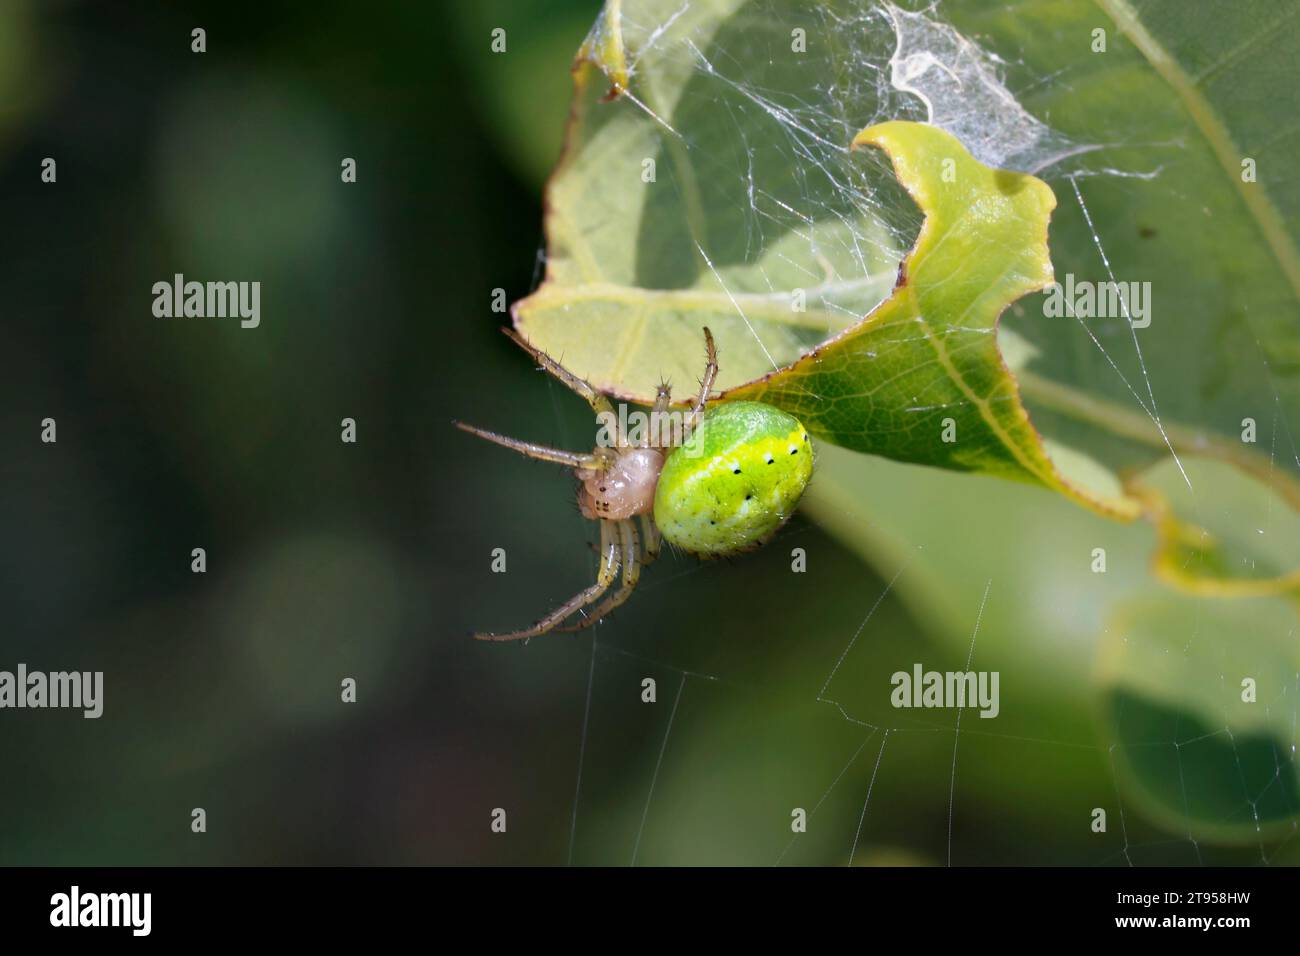 cucumber green spider (Araniella spec.), sitting in web on a leaf, Germany Stock Photo